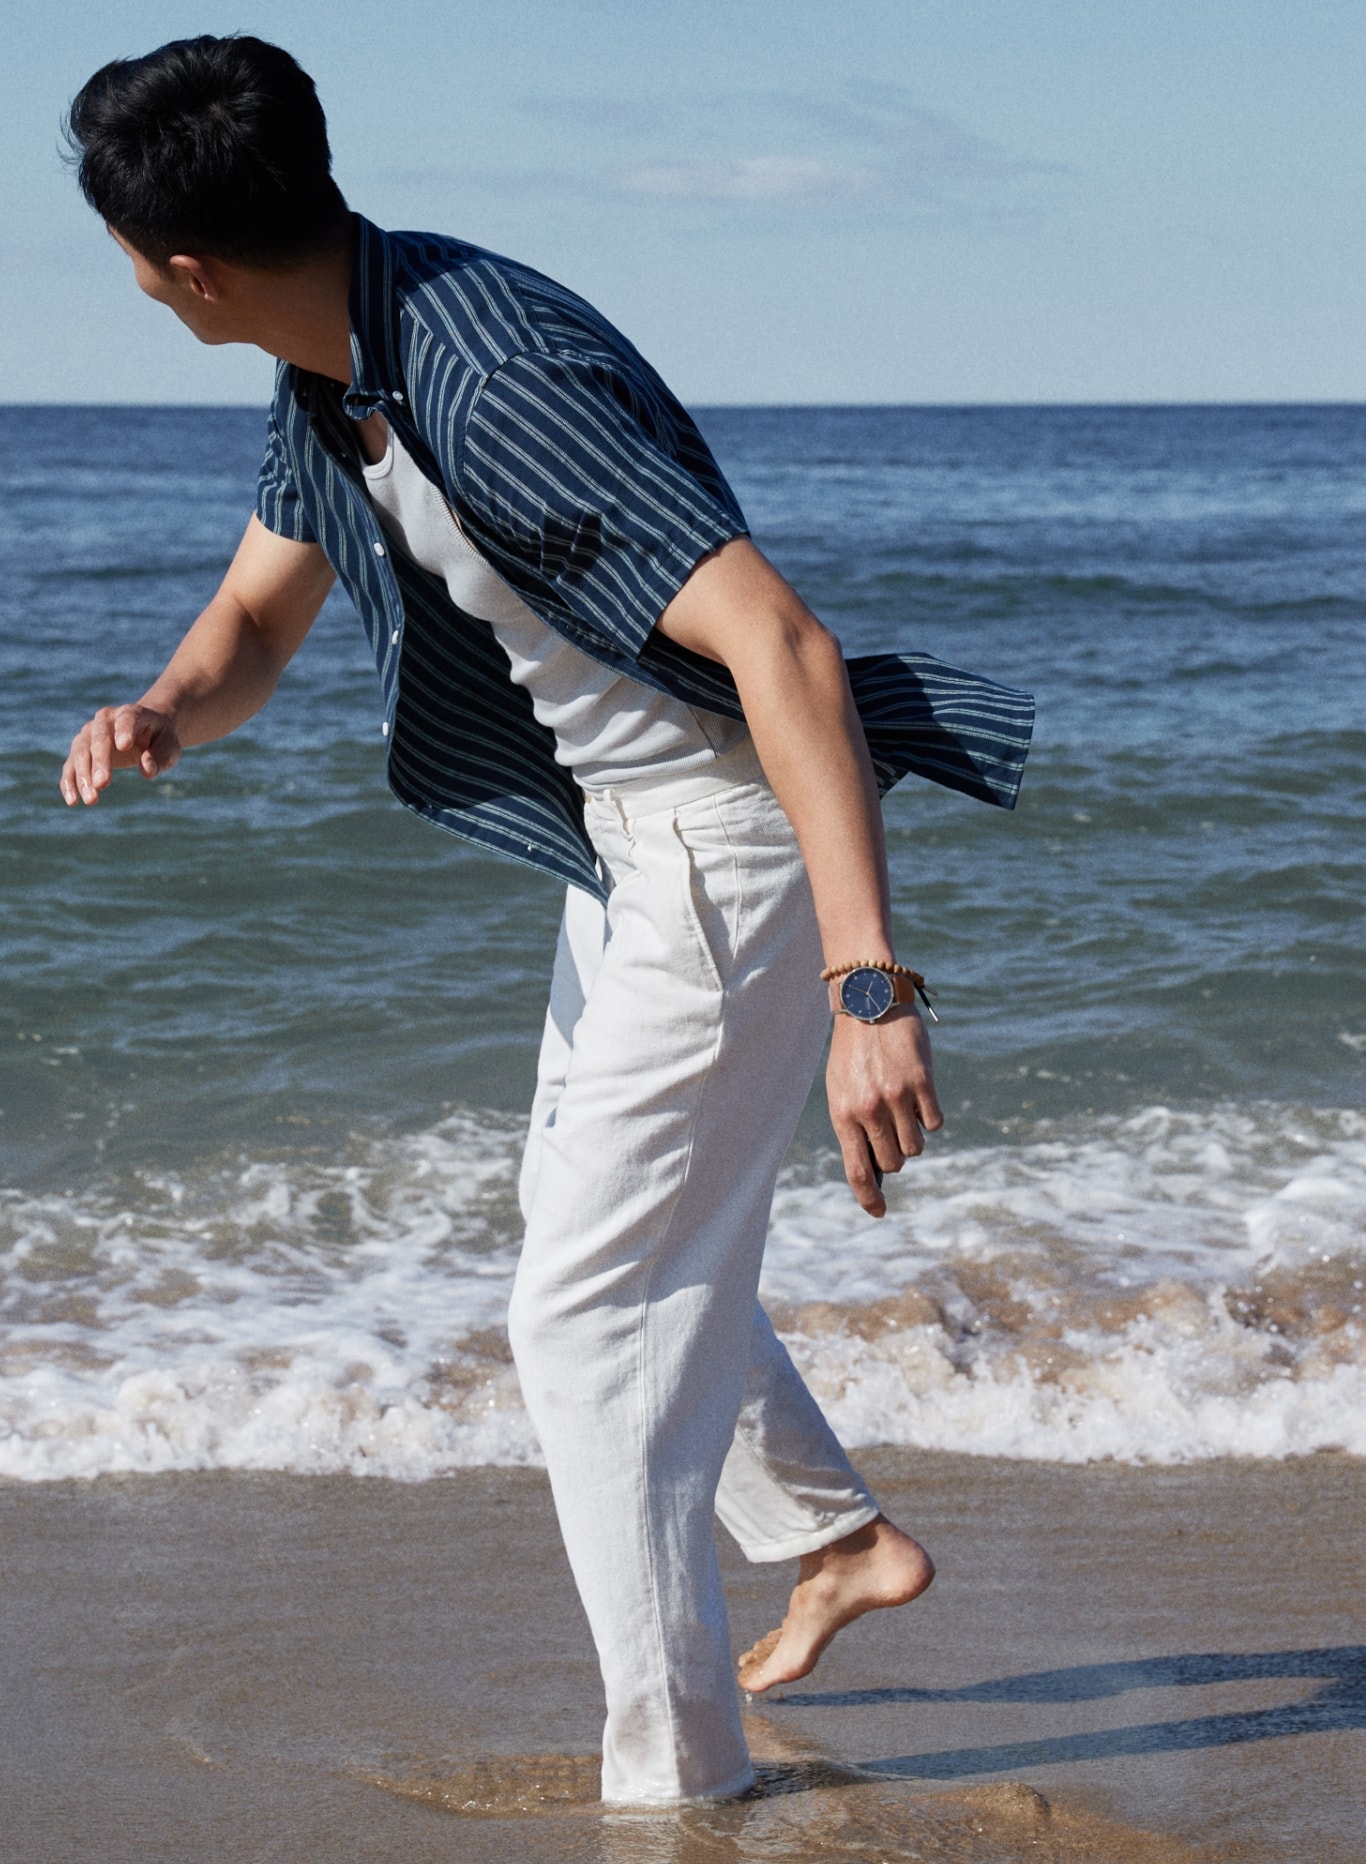 Image of a man on a beach wearing a Skagen watch